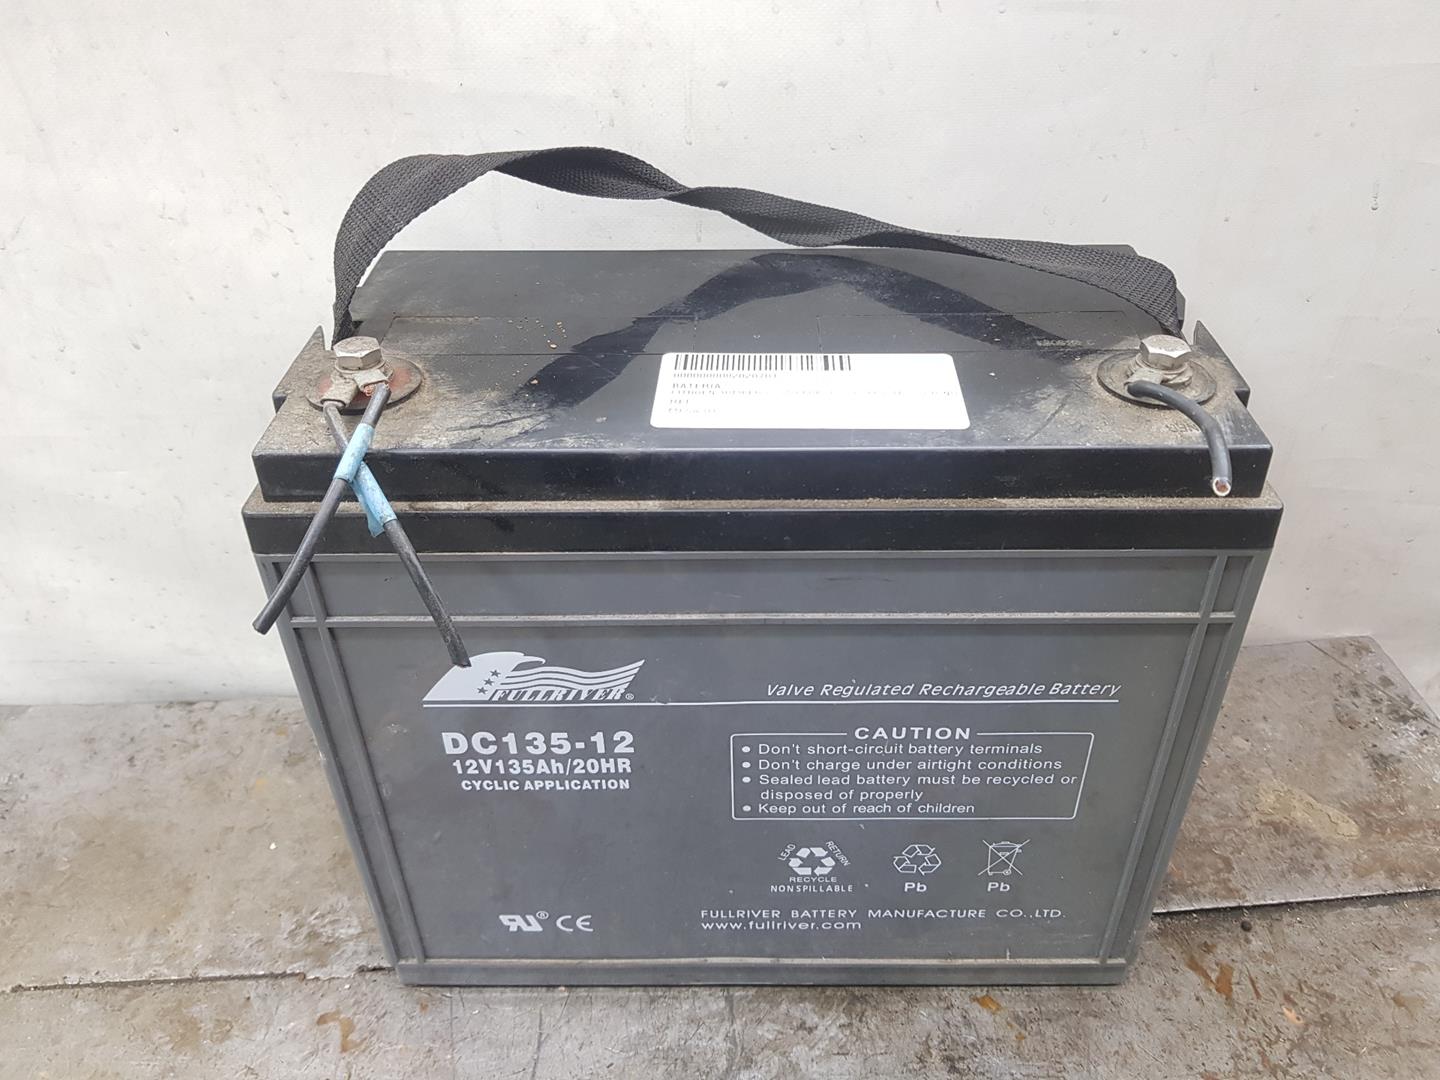 CITROËN Jumper Battery FULLRIVER, DC135-12 24214594